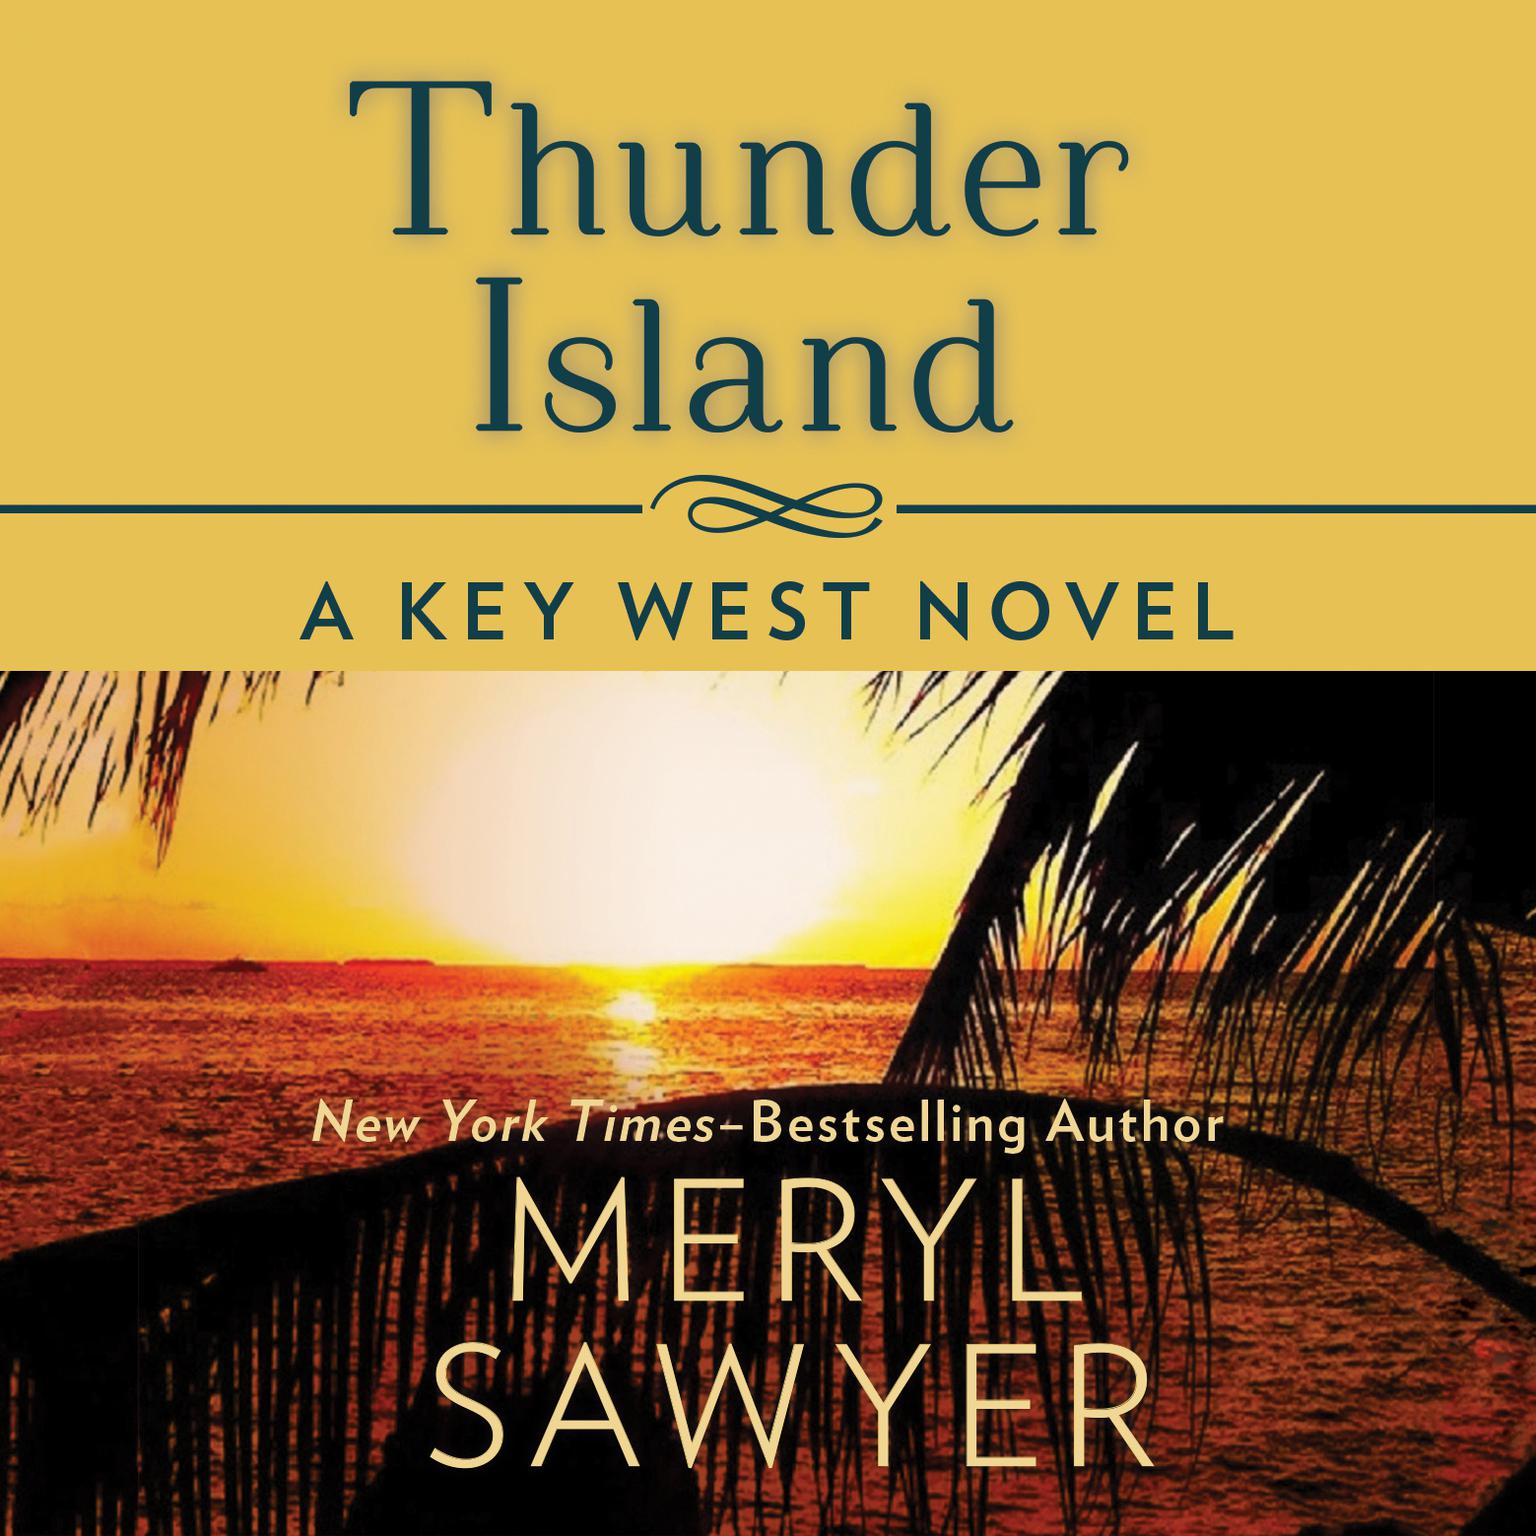 Thunder Island Audiobook, by Meryl Sawyer